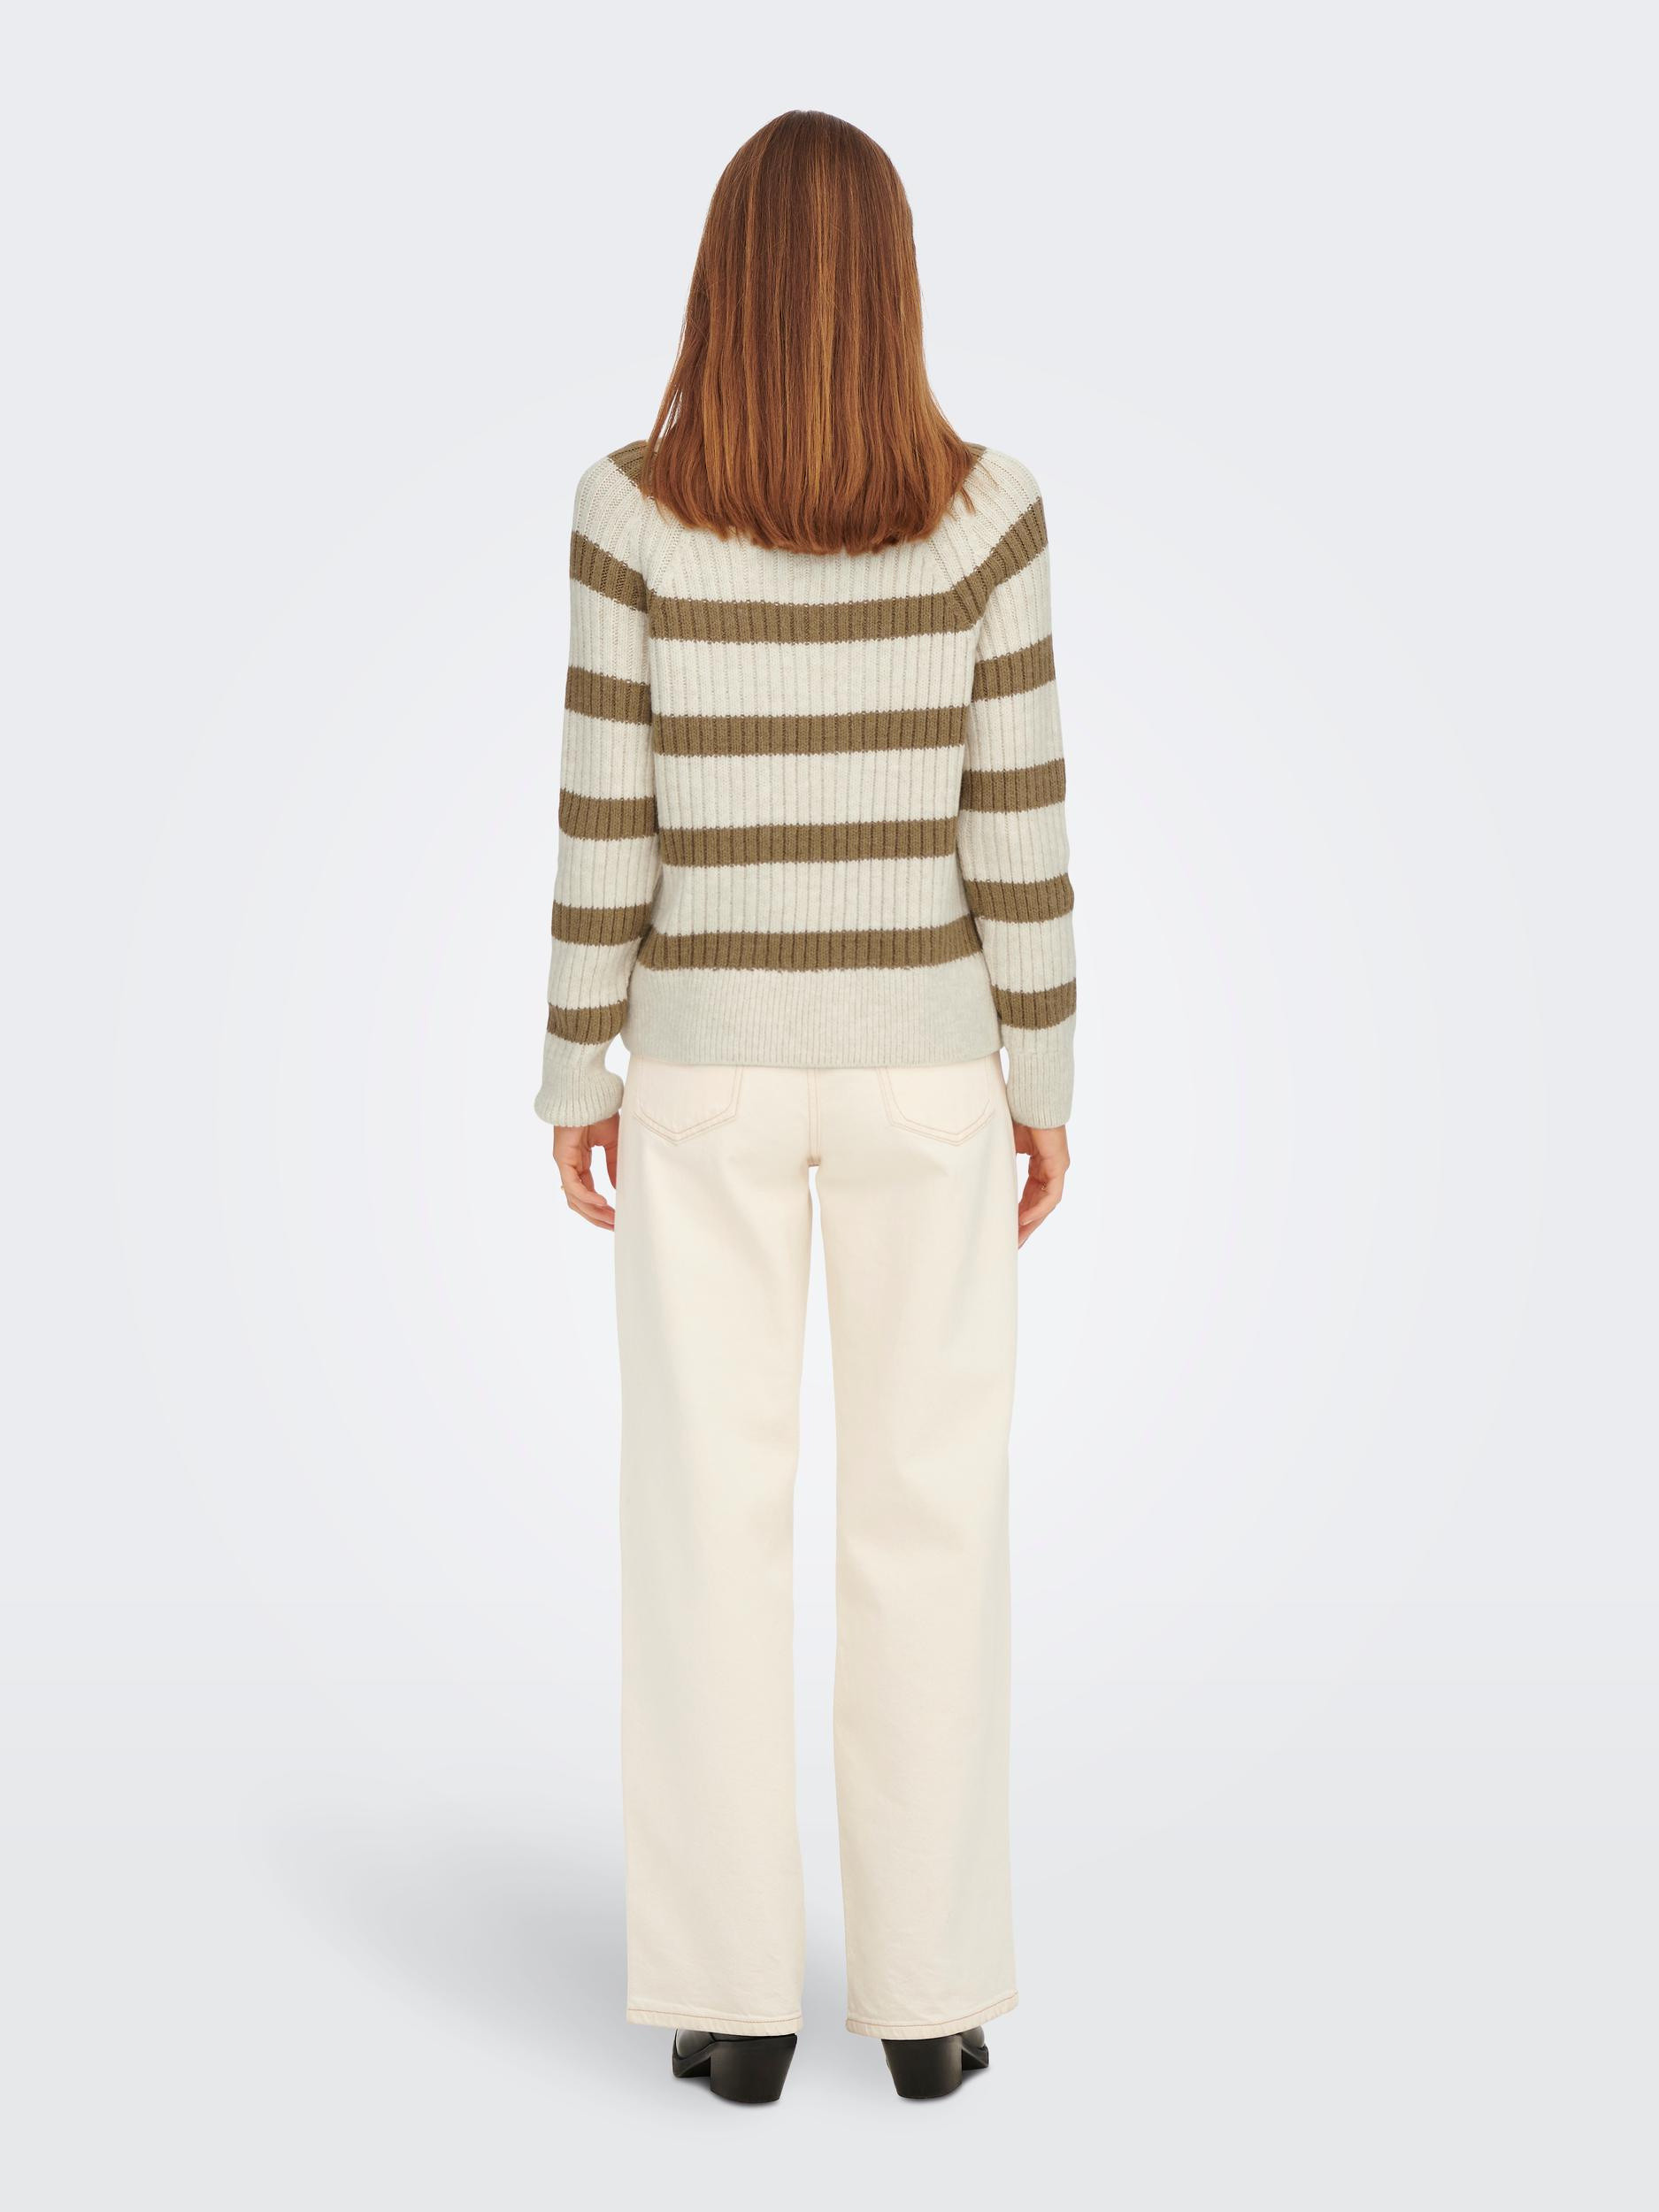 Only - Striped half-zip pullover, Beige, large image number 3